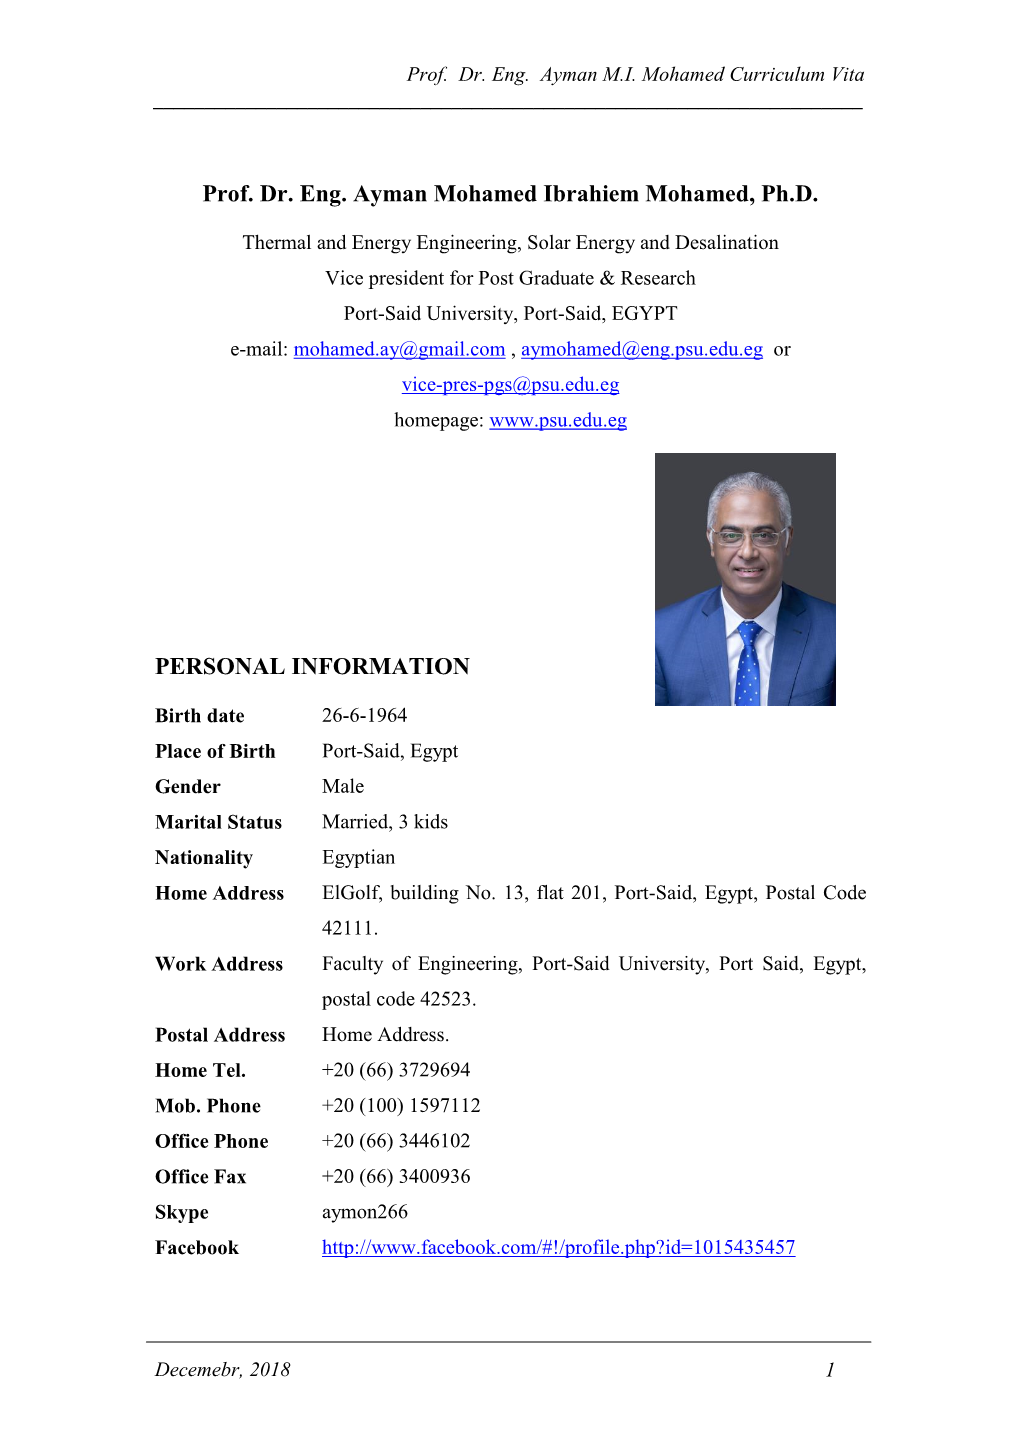 Prof. Dr. Eng. Ayman Mohamed Ibrahiem Mohamed, Ph.D. PERSONAL INFORMATION